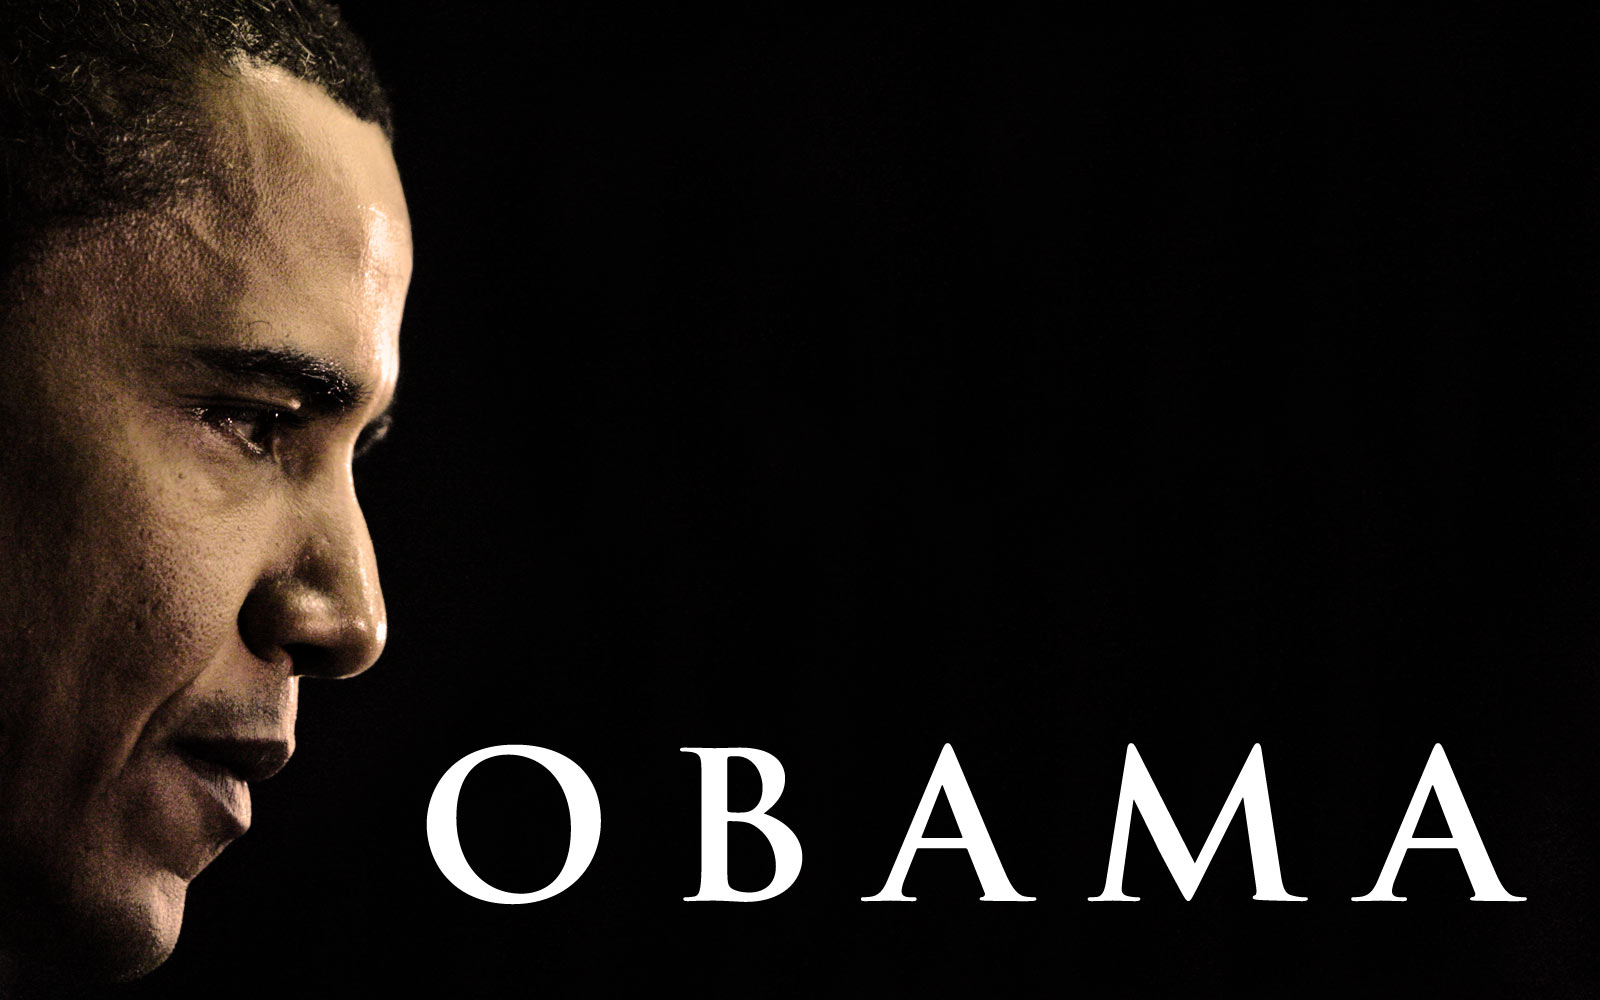 President Barack Obama HD Image Photos Amp Wallpaper